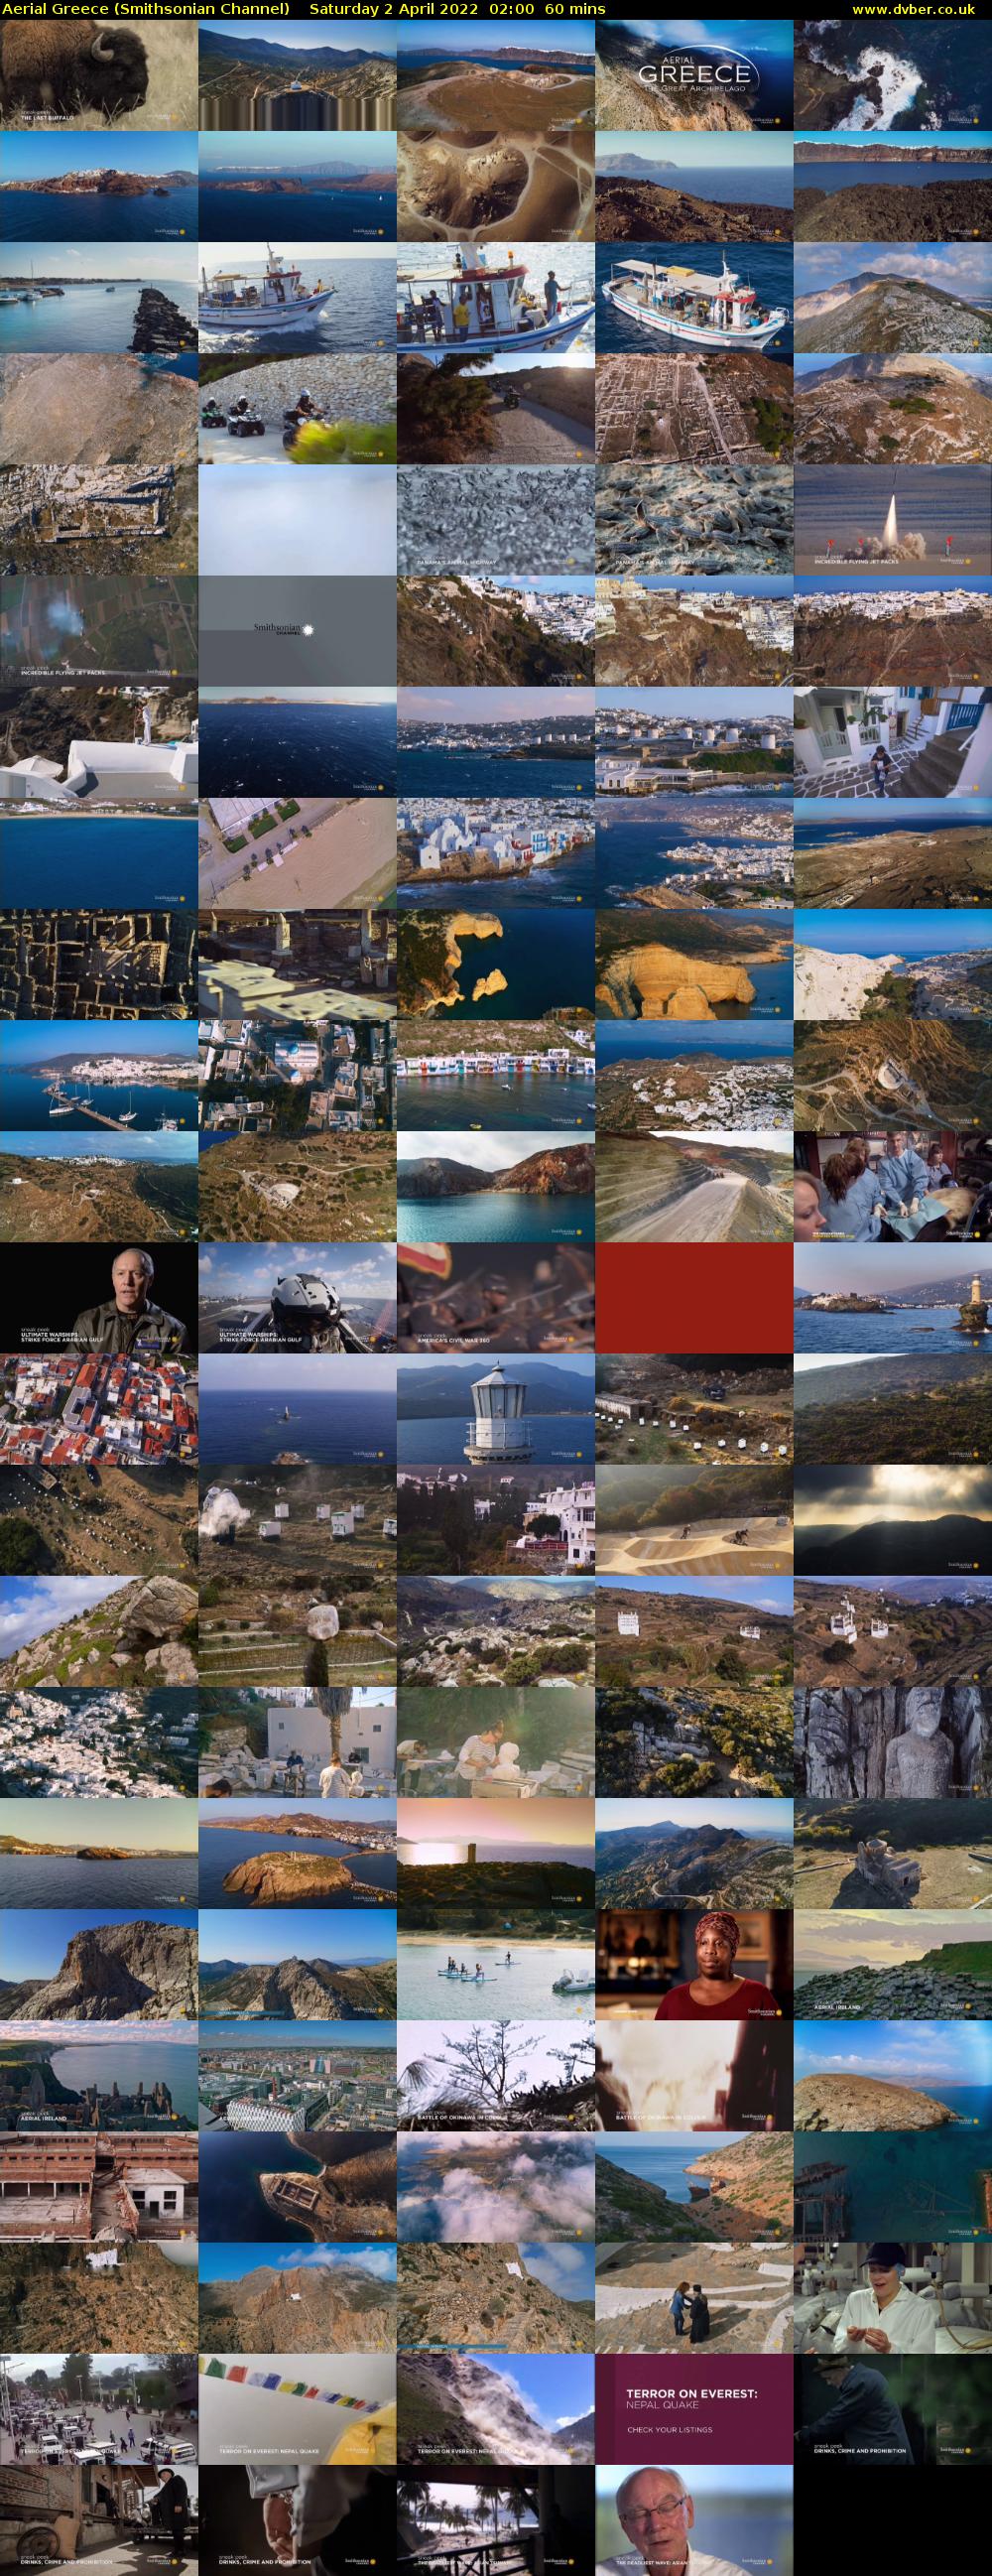 Aerial Greece (Smithsonian Channel) Saturday 2 April 2022 02:00 - 03:00